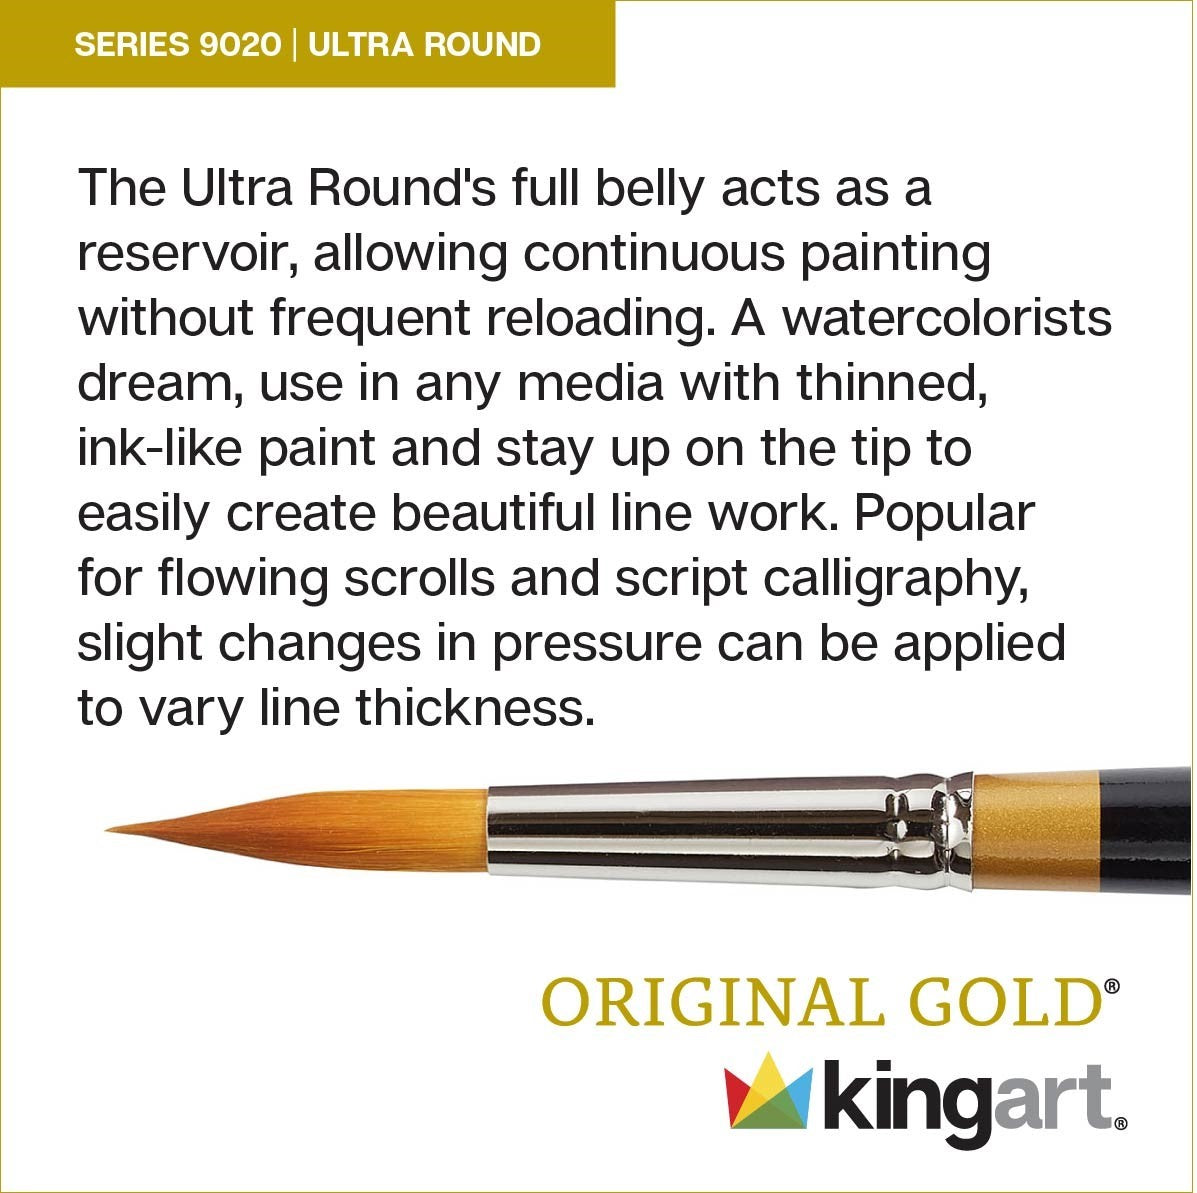 KINGART® Original Gold® Aqua Acrylic Handle Series, Premium Golden Taklon,  Multimedia Artist Brushes, Gift Box, Set of 8